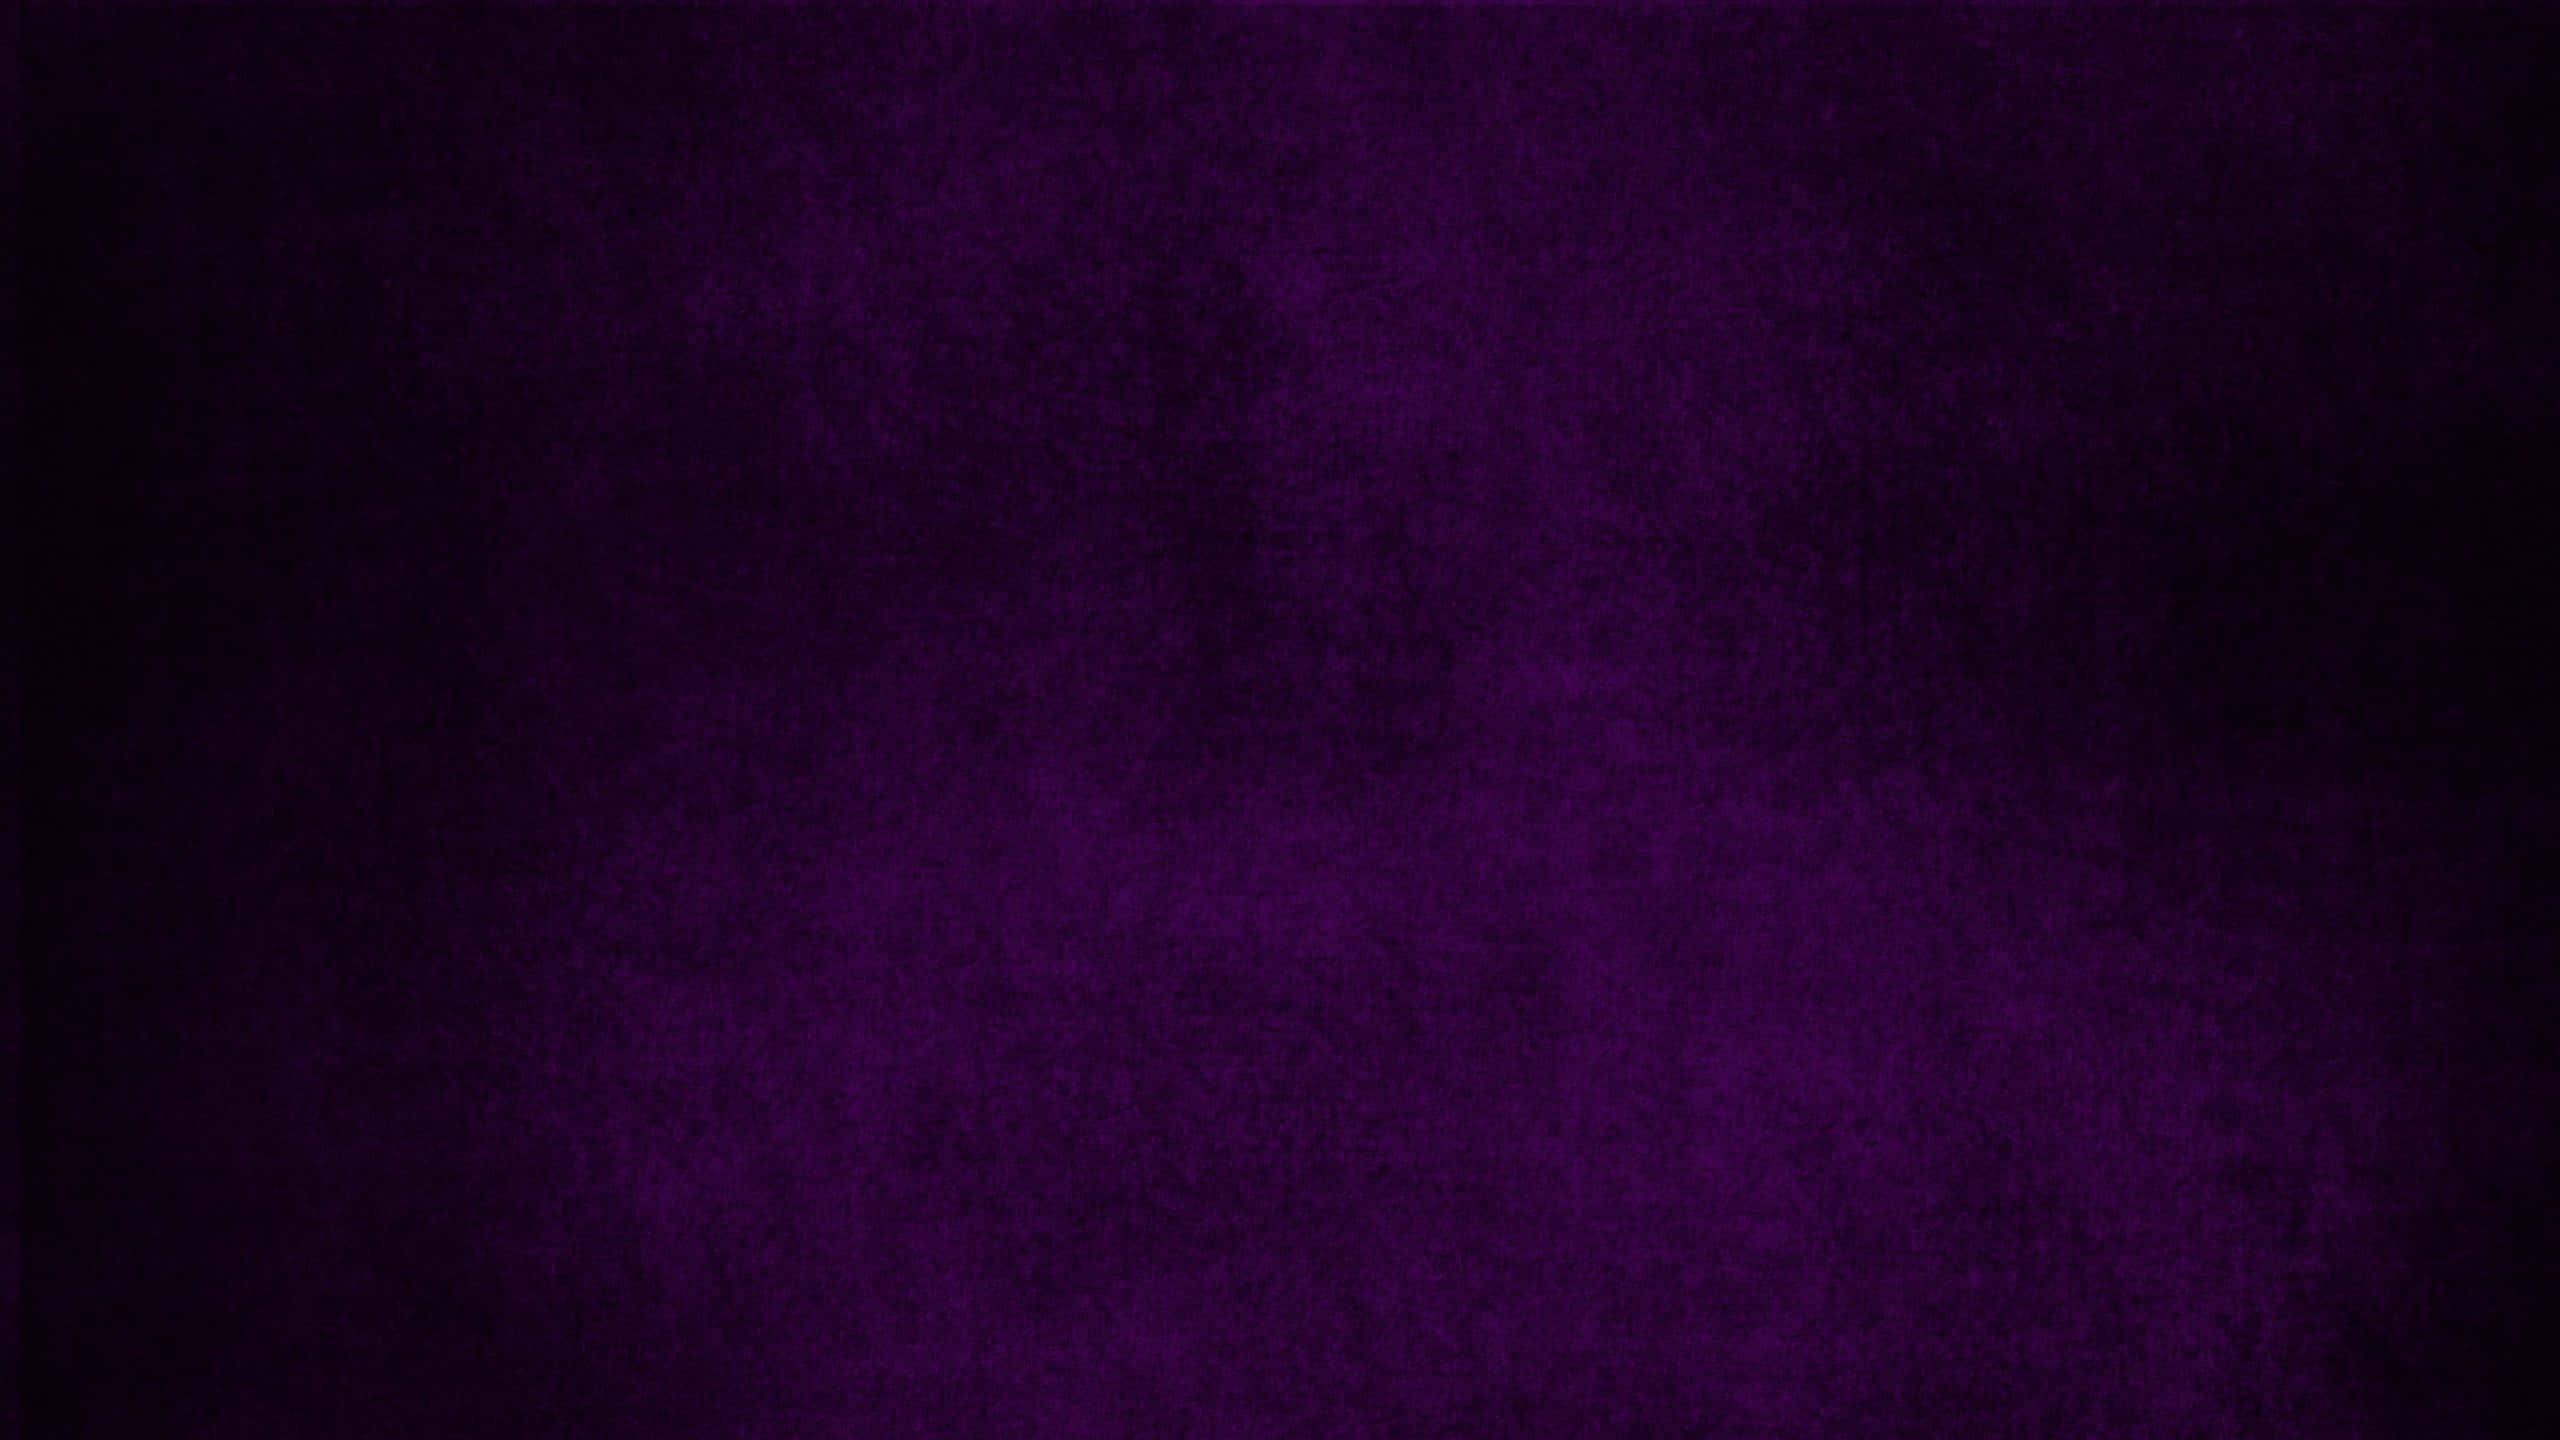 Purple And Black Vague Smoke Background